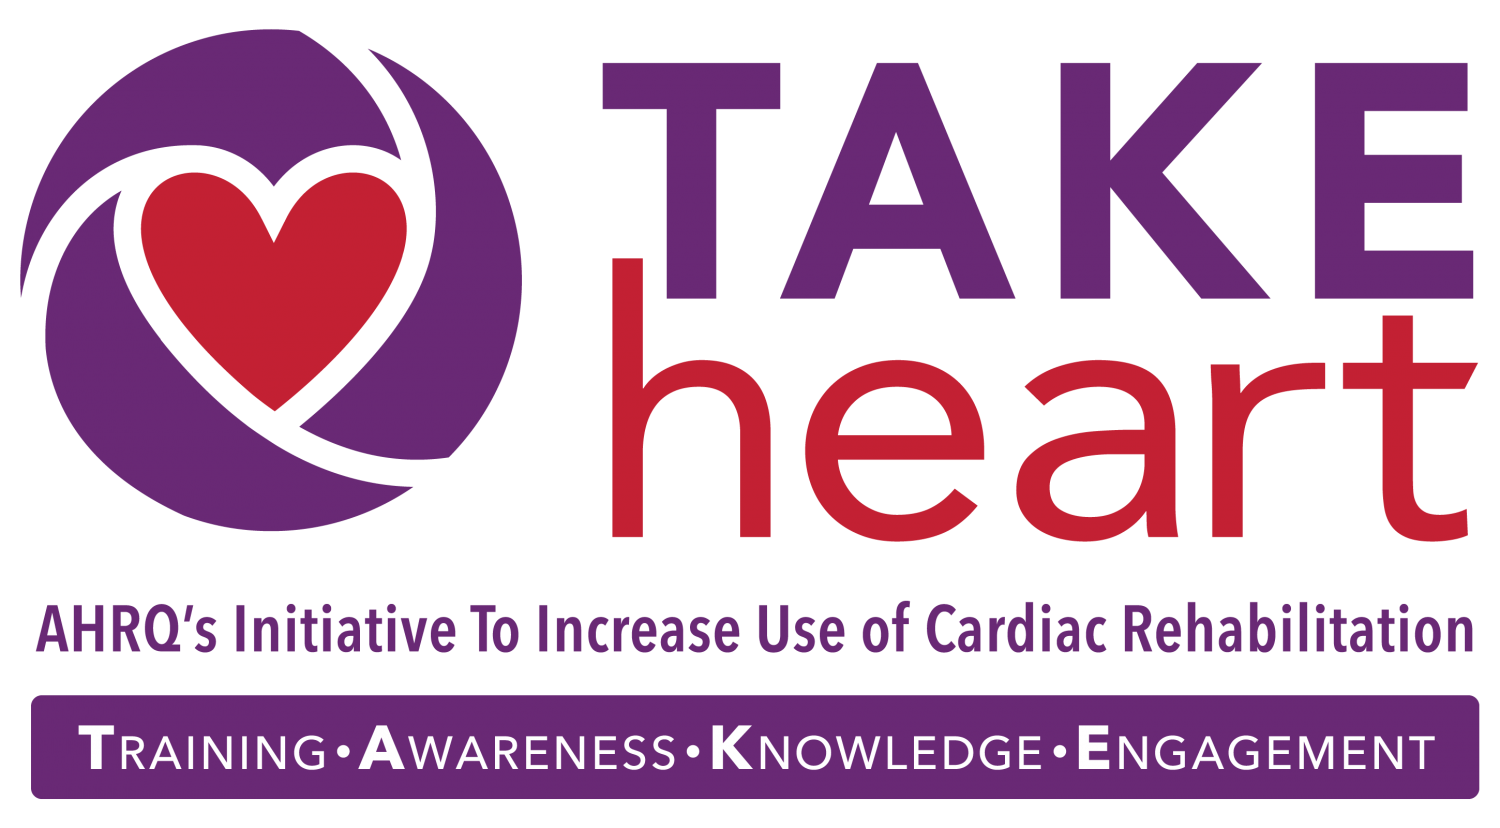 TAKEheart: AHRQ’s Initiative to Increase Cardiac Rehabilitation logo